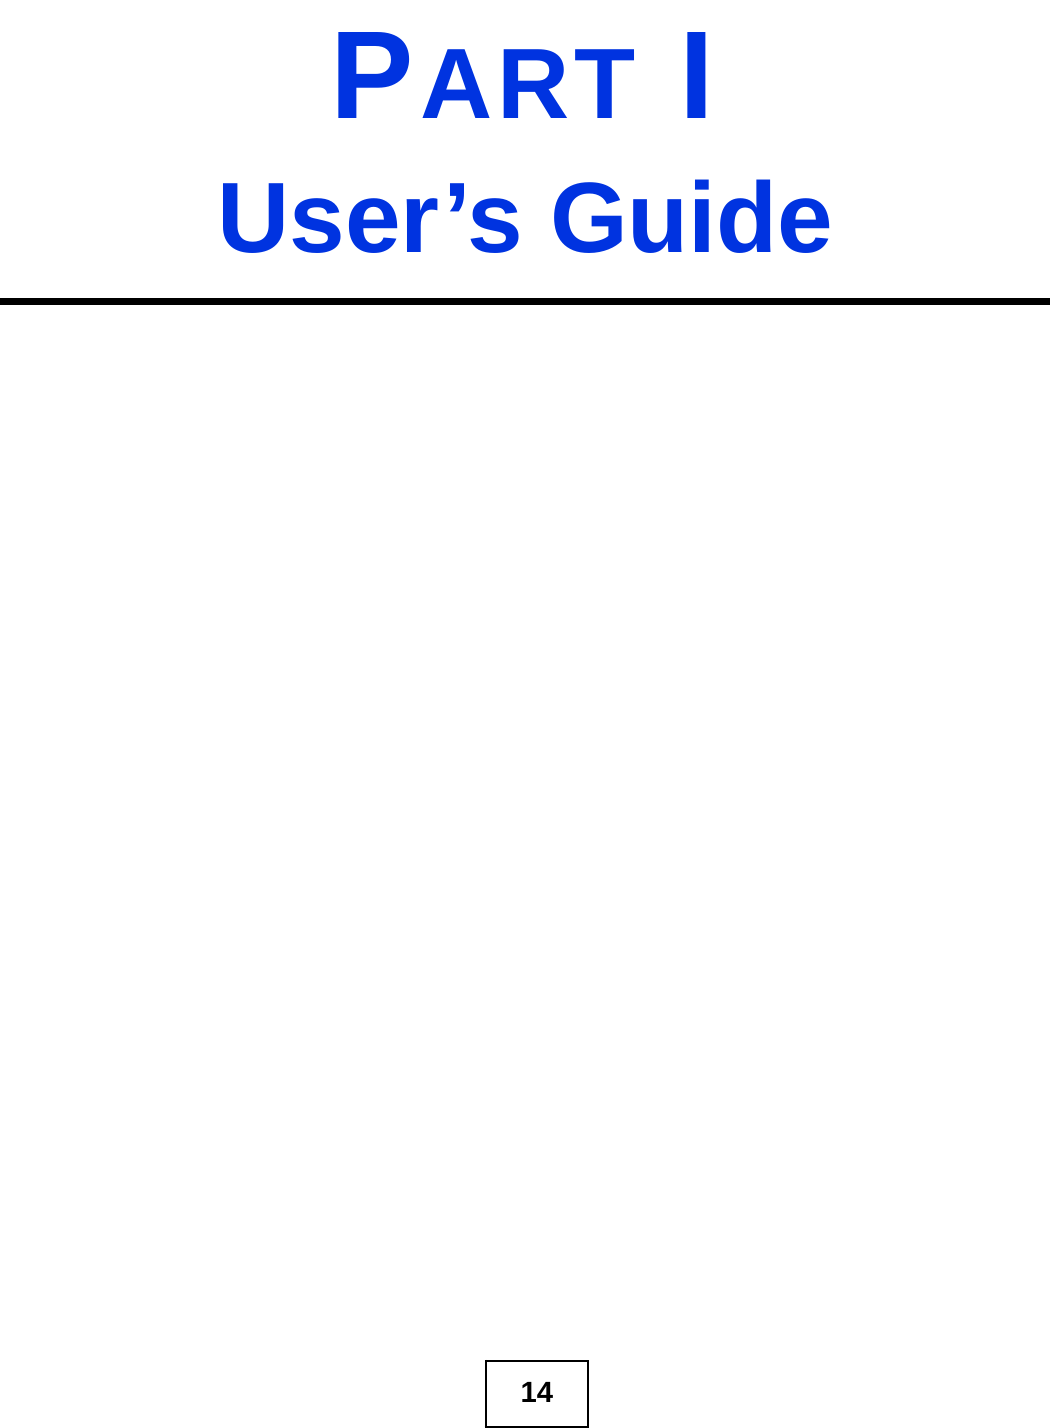   PART I  User’s Guide 14  